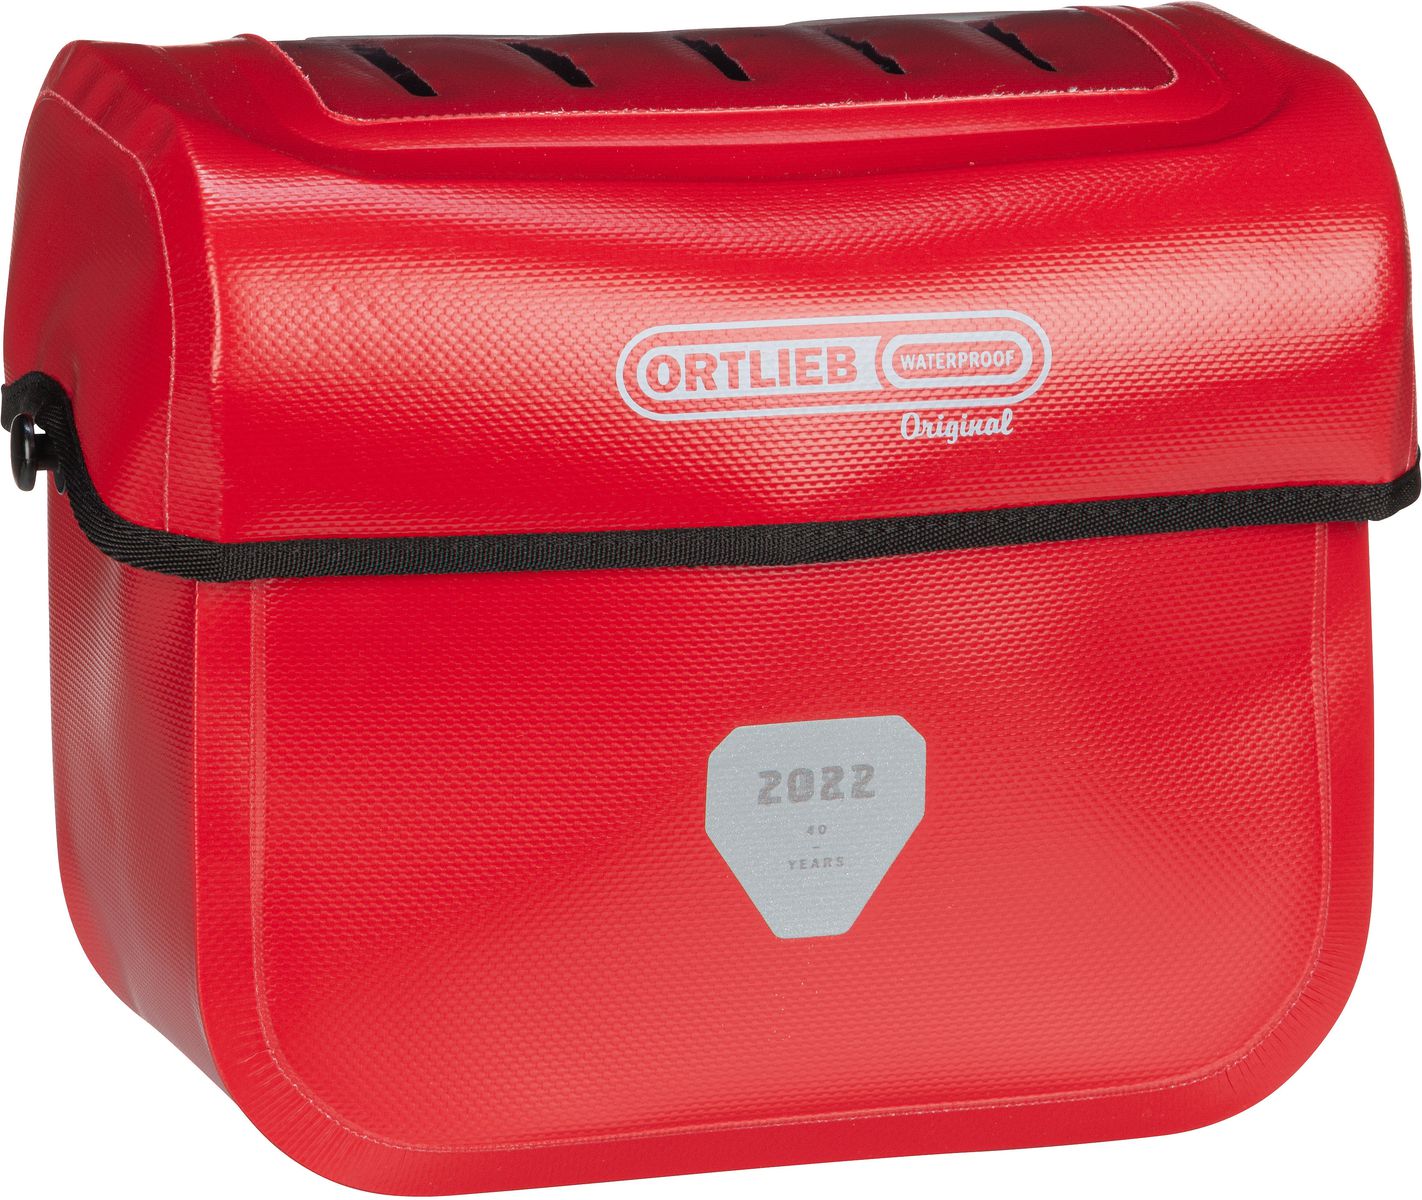 ORTLIEB Ultimate Original  in Rot (7 Liter), Fahrradtasche